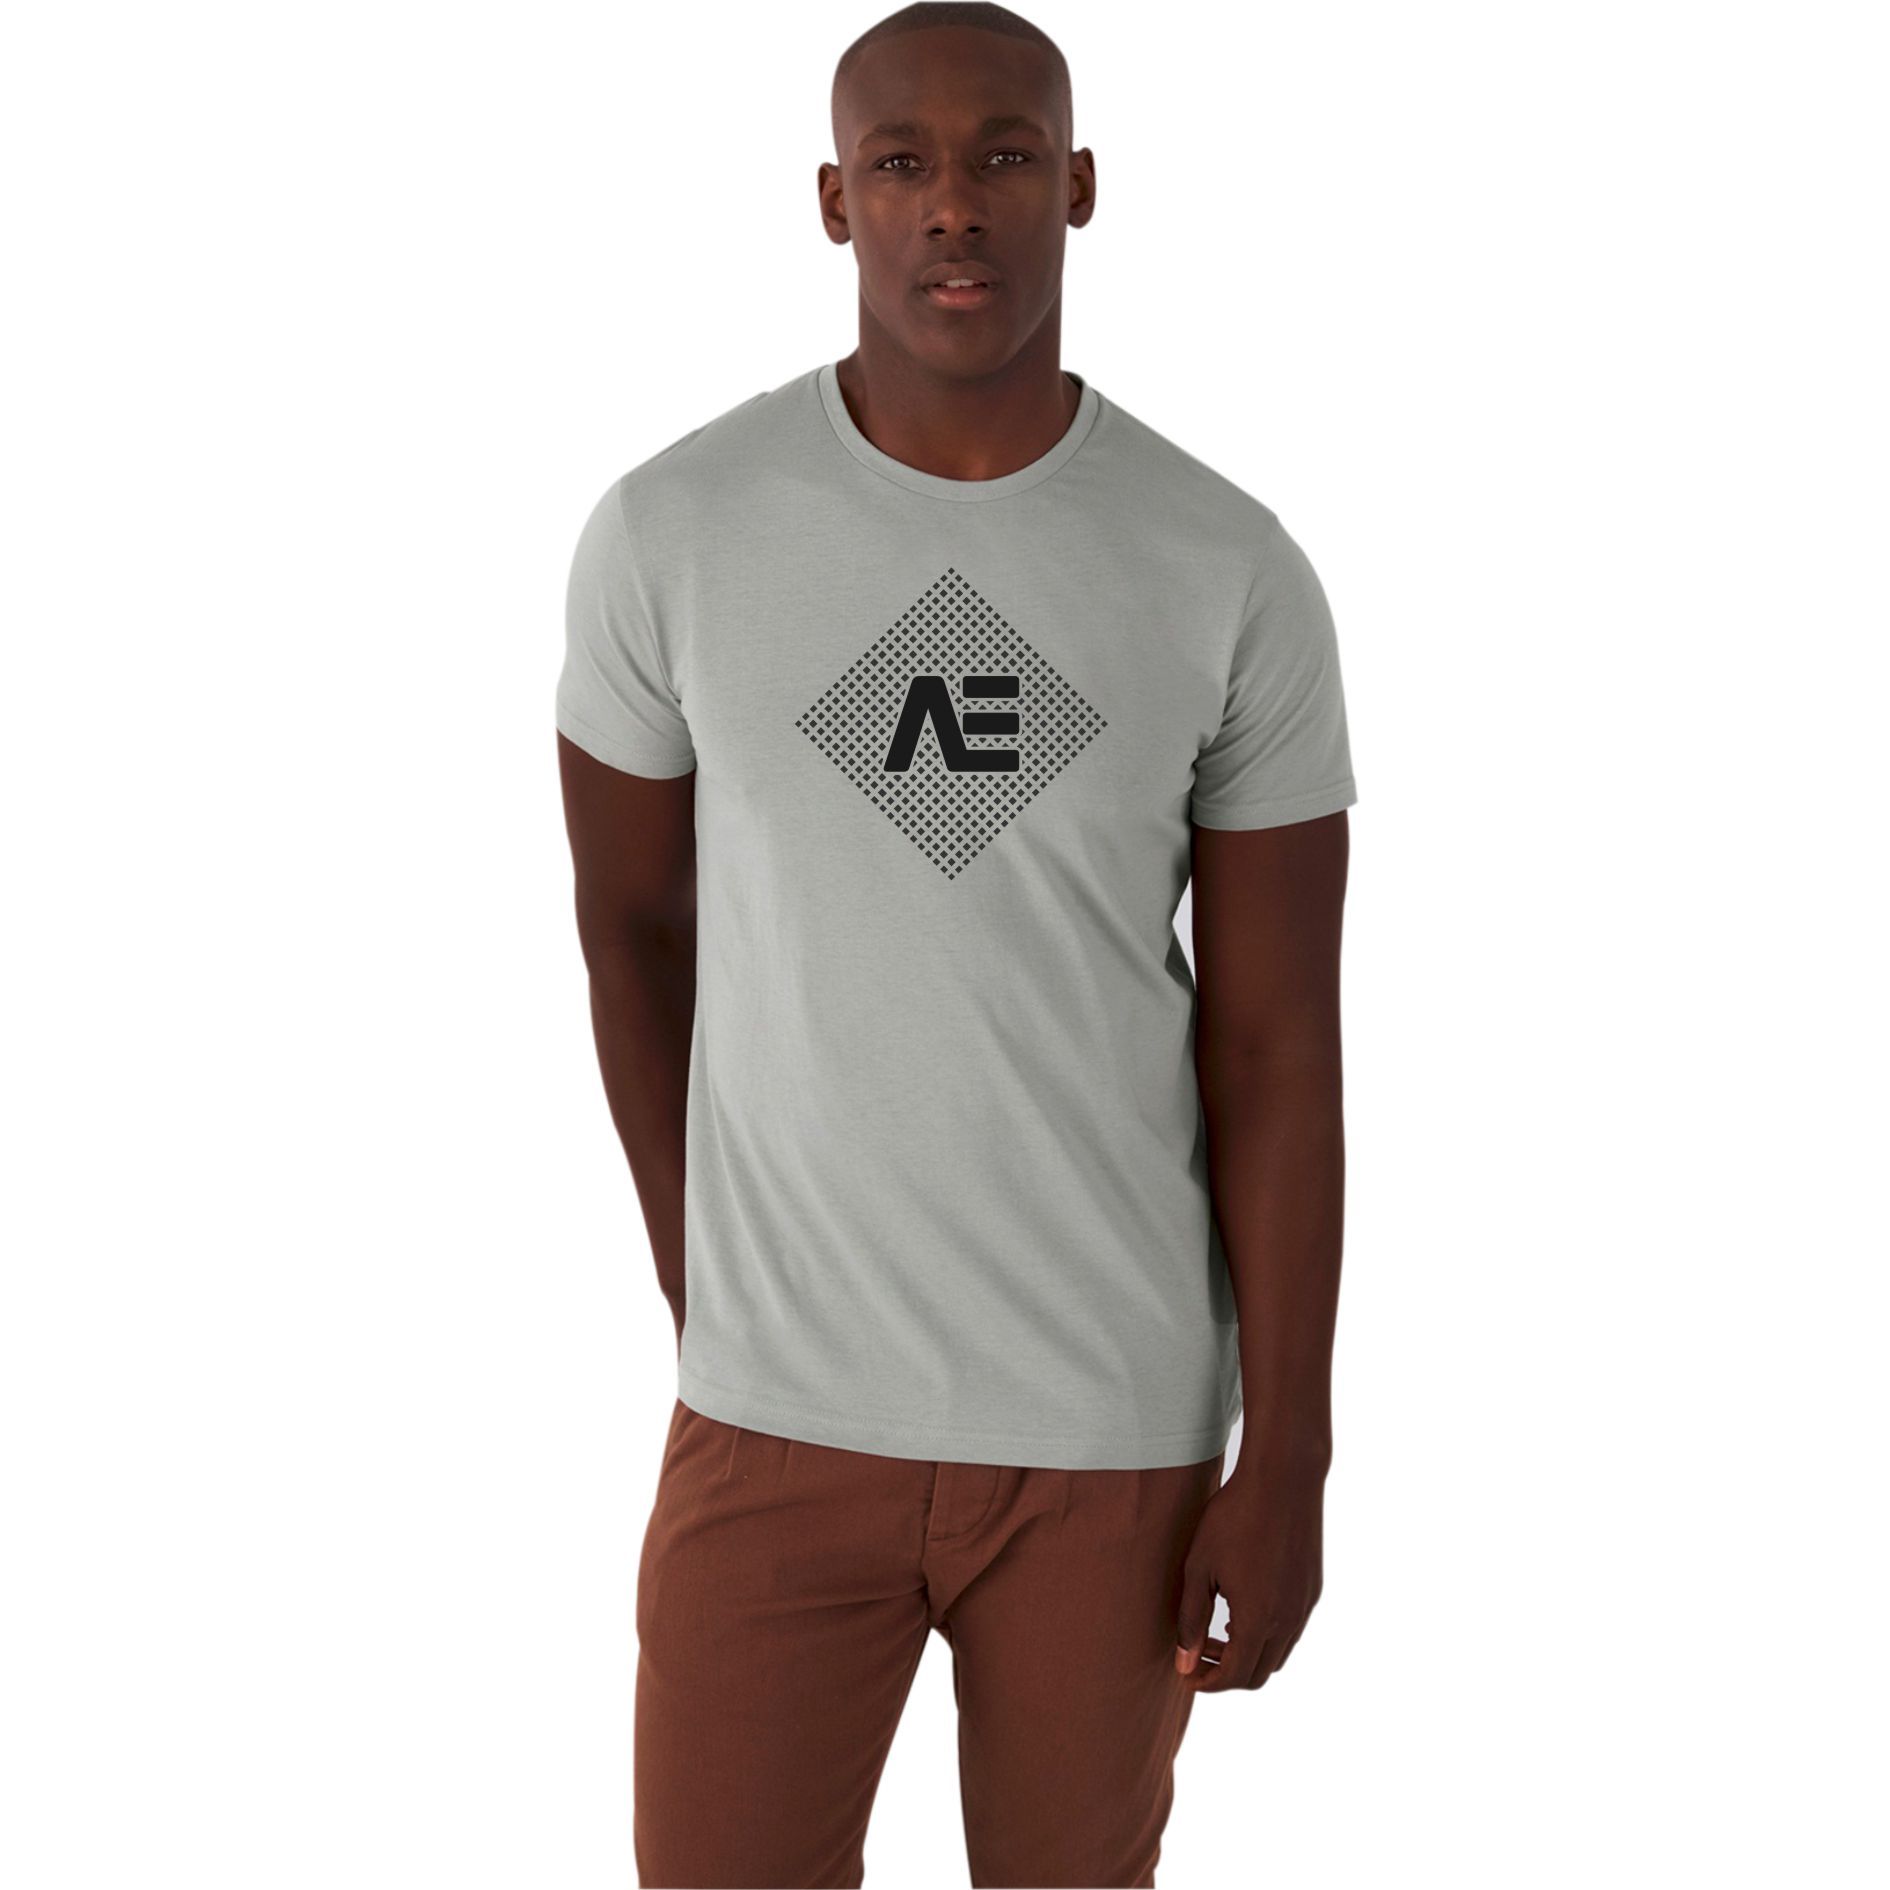 Daevor Camiseta Casual-Orgánica 104 - Comprar camisetas de algodon organico - camisetas algodón orgánico hombre